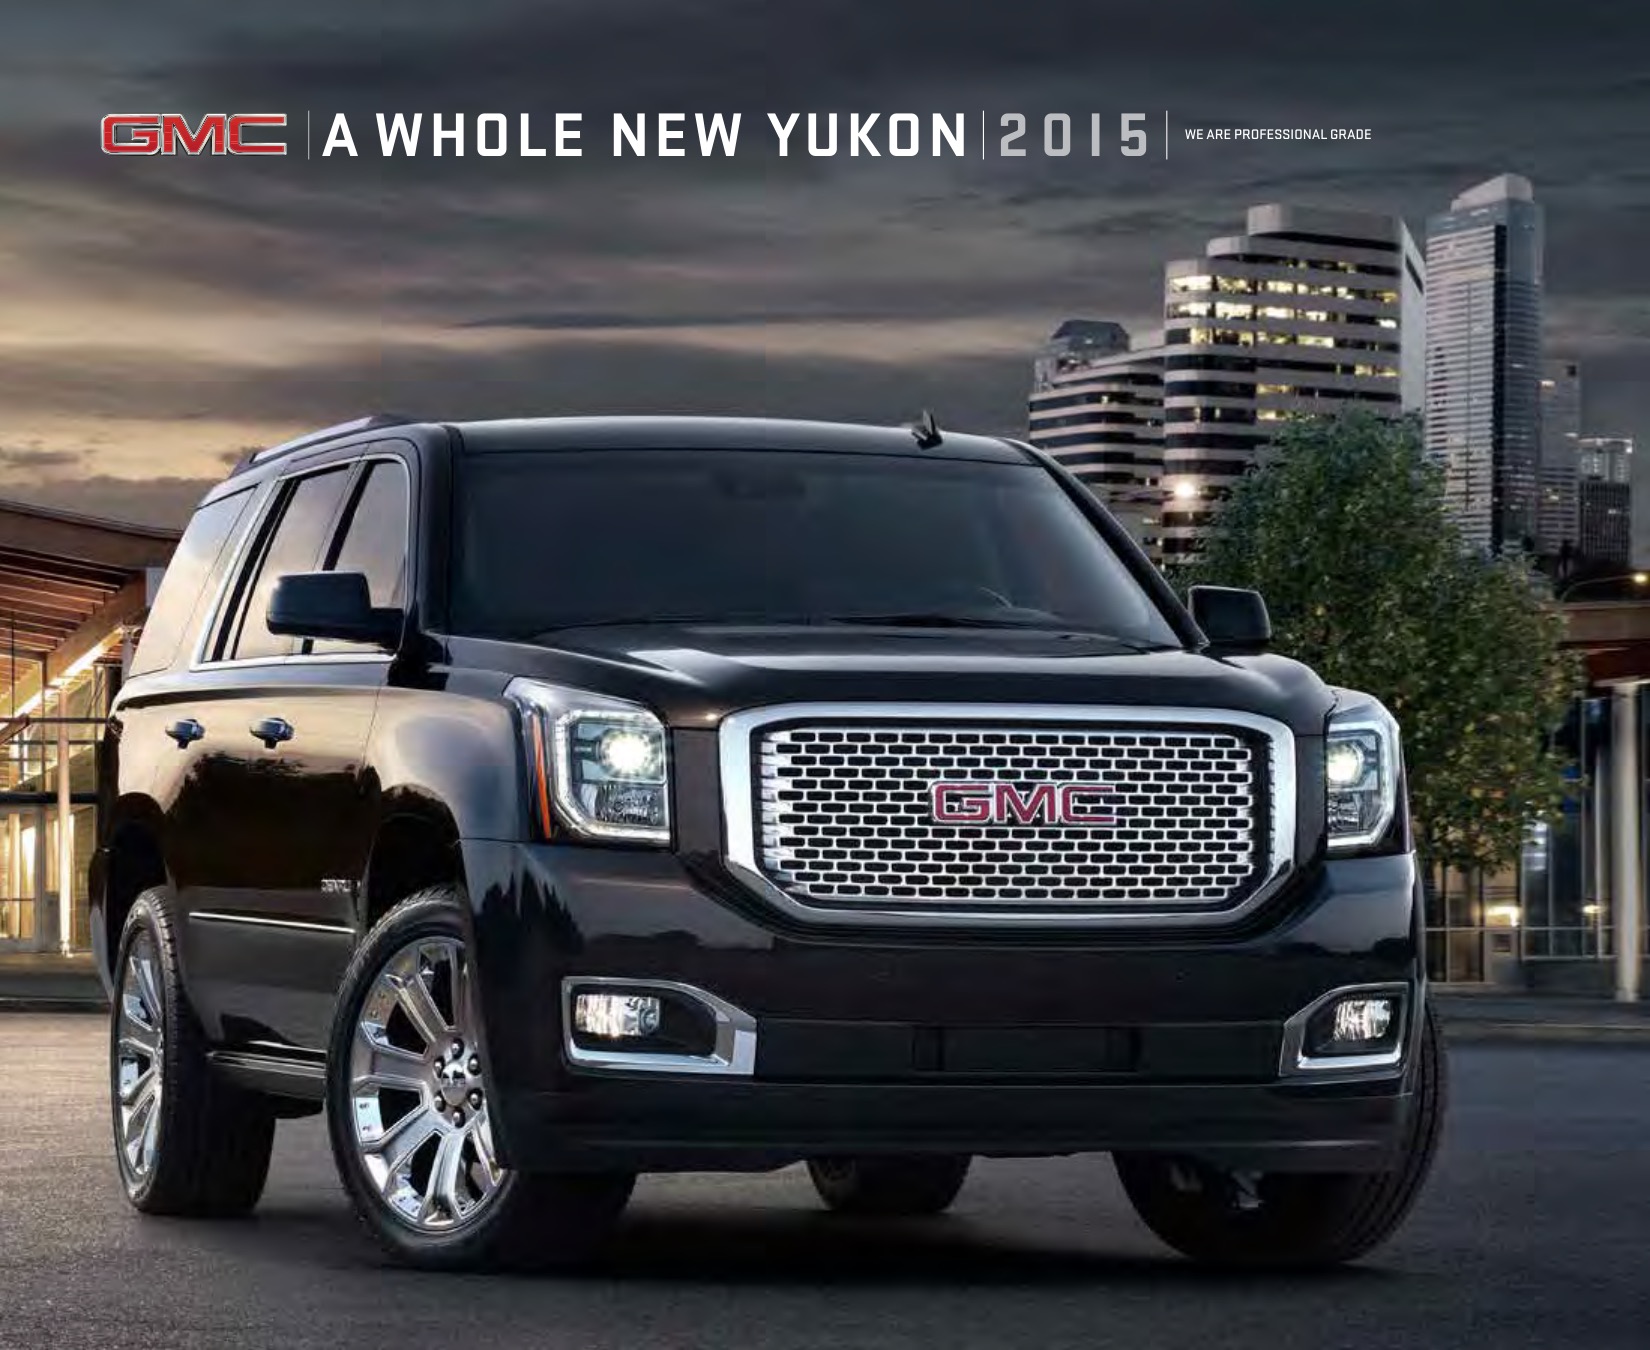 2015 GMC Yukon Brochure